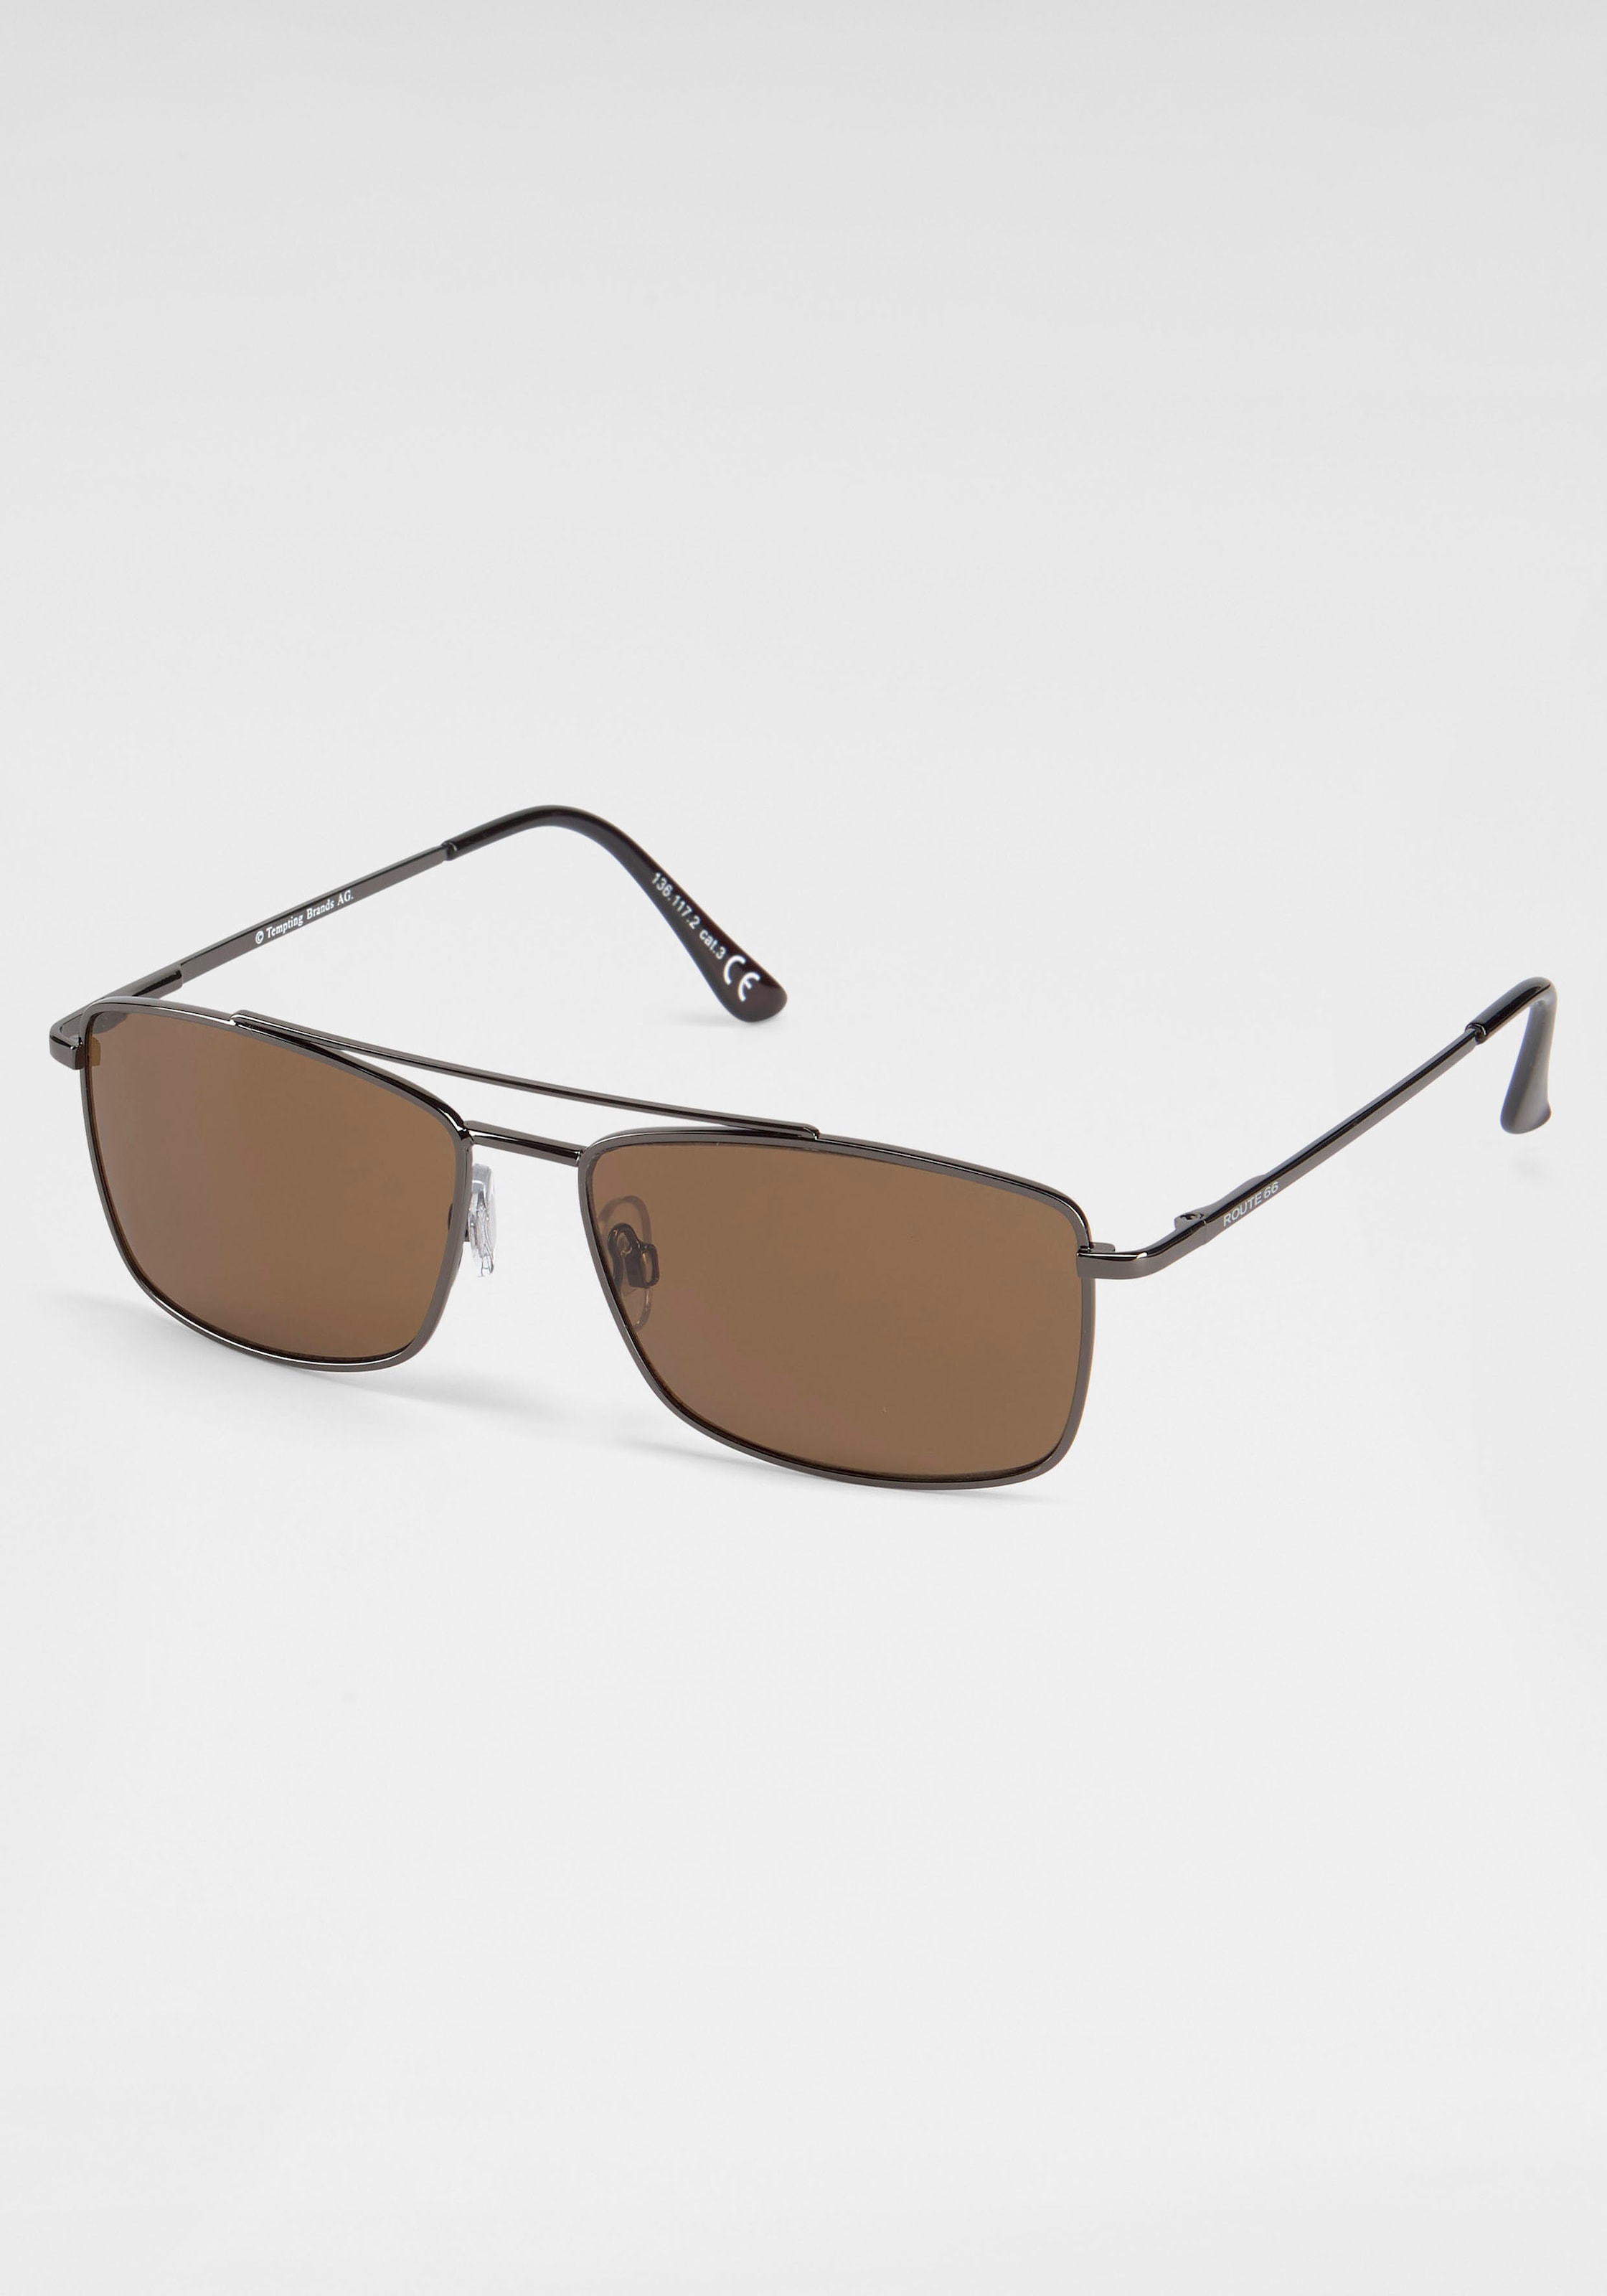 Freedom 66 Eyewear Sonnenbrille online kaufen ROUTE the Feel